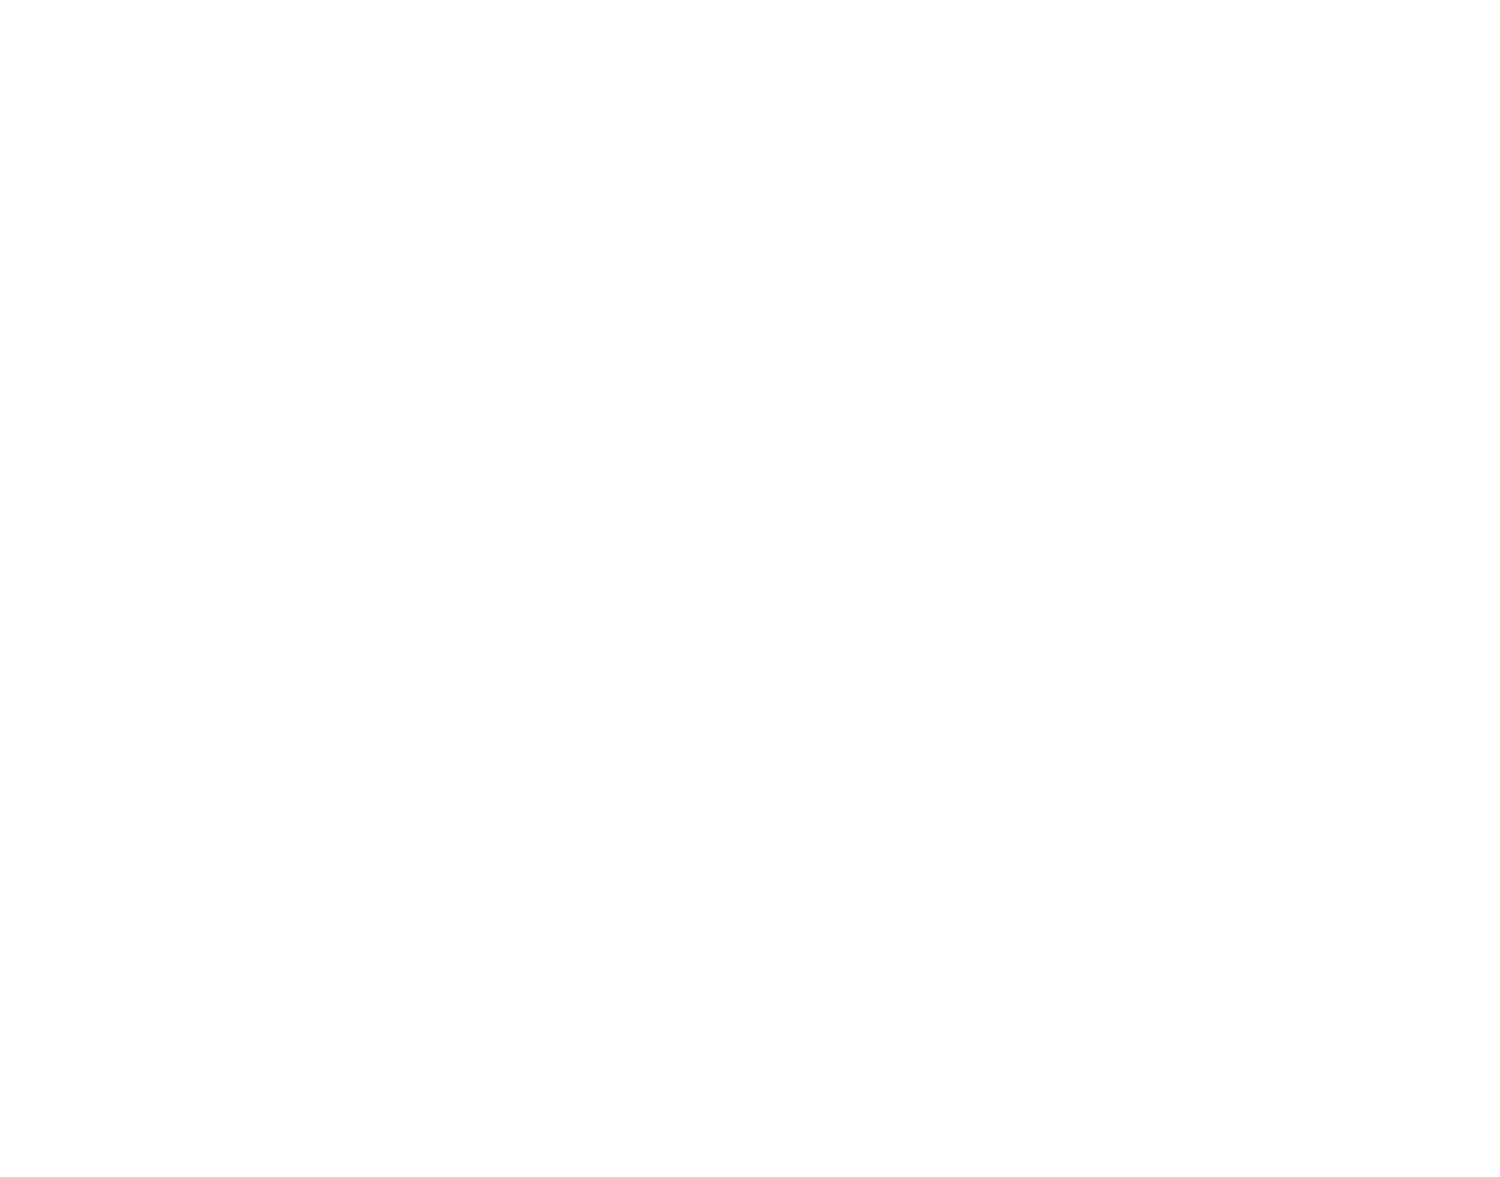 Code of the Freaks